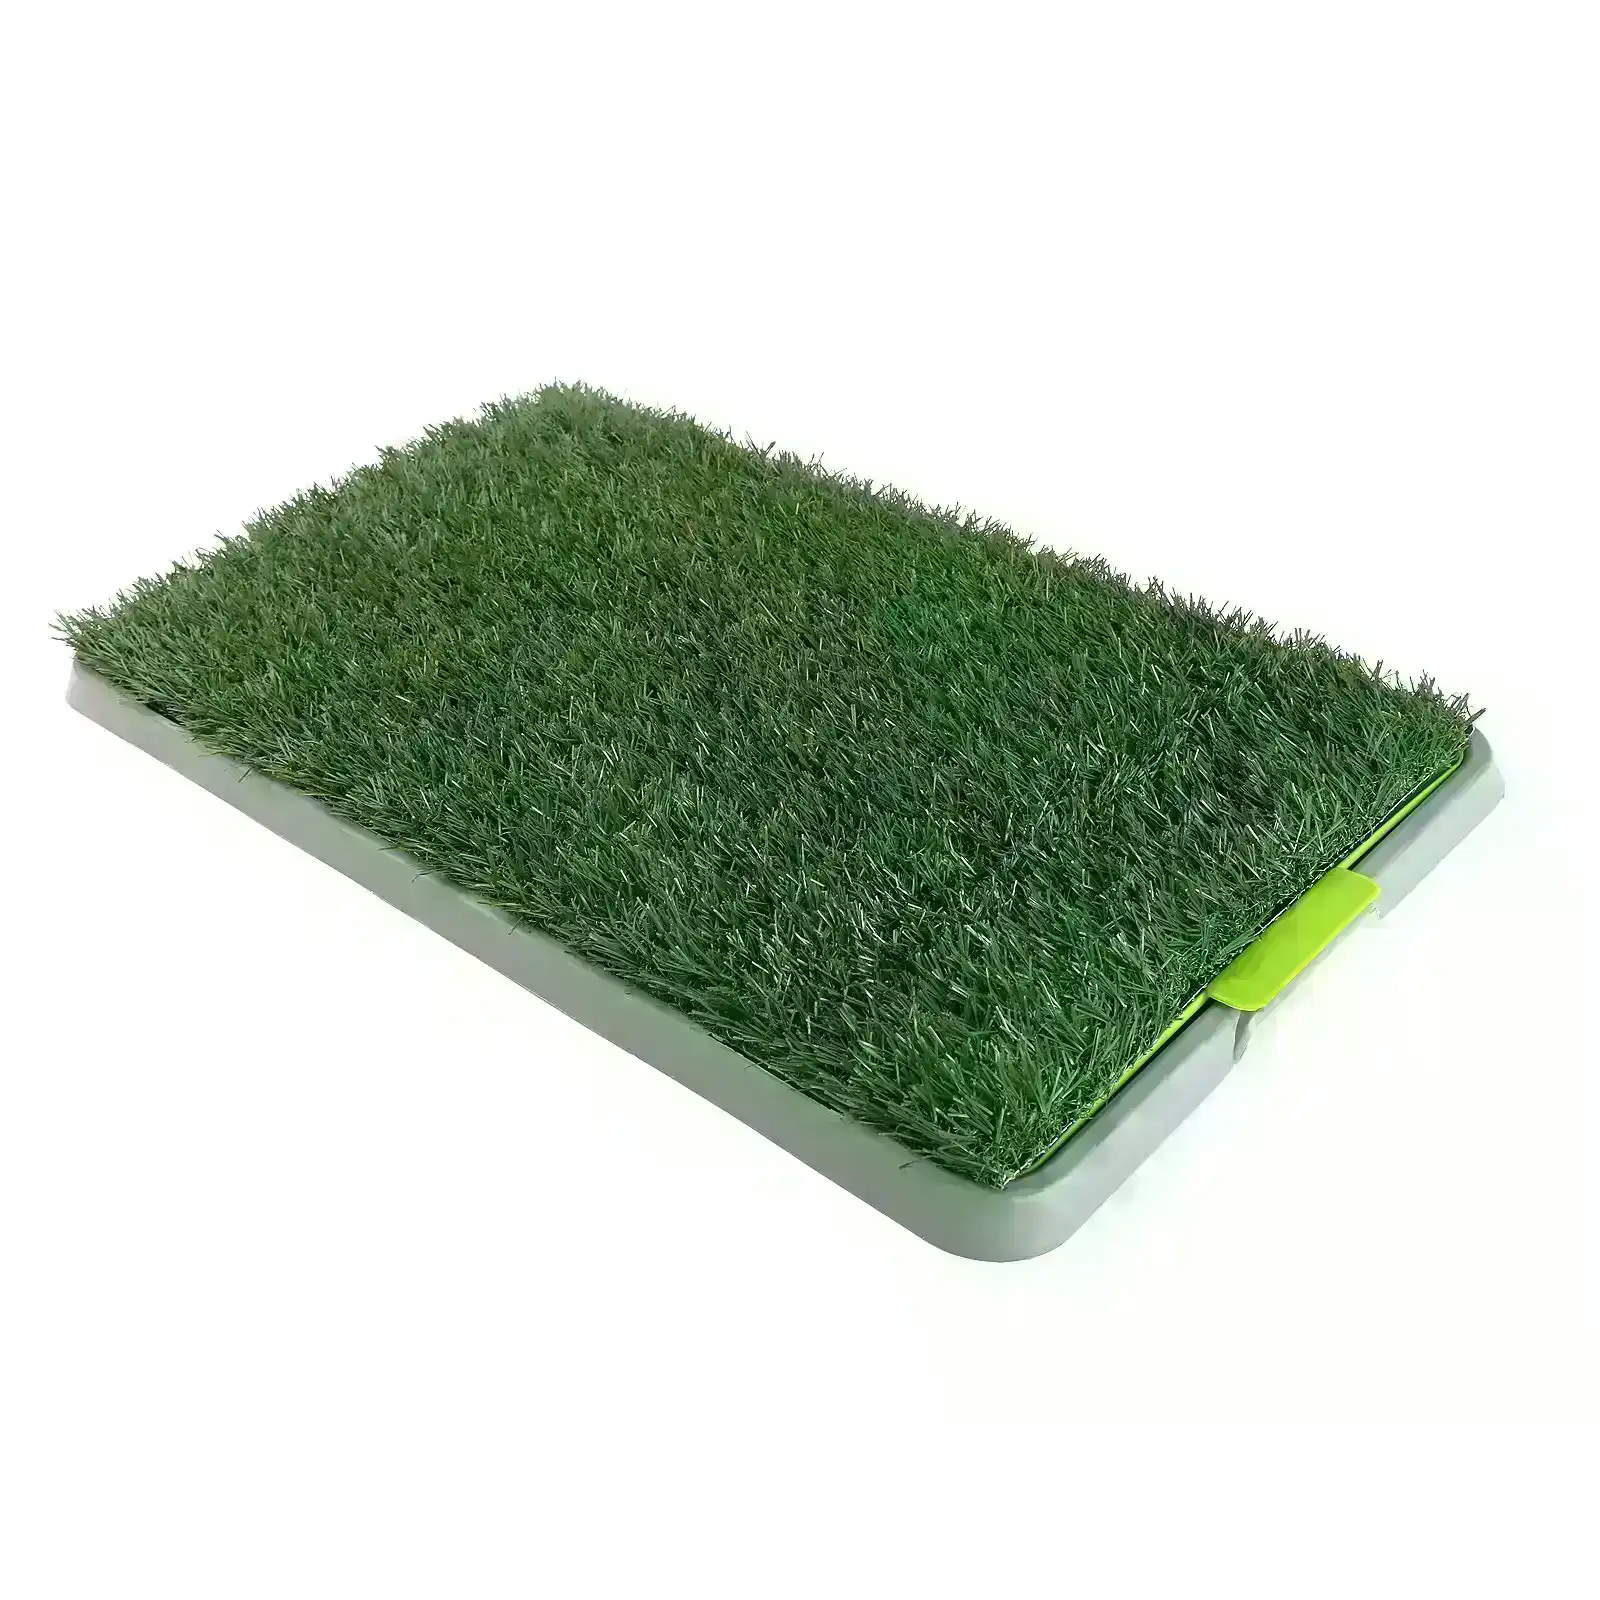 69cm x 43cm Pet Potty Tray With 1 Grass Mat